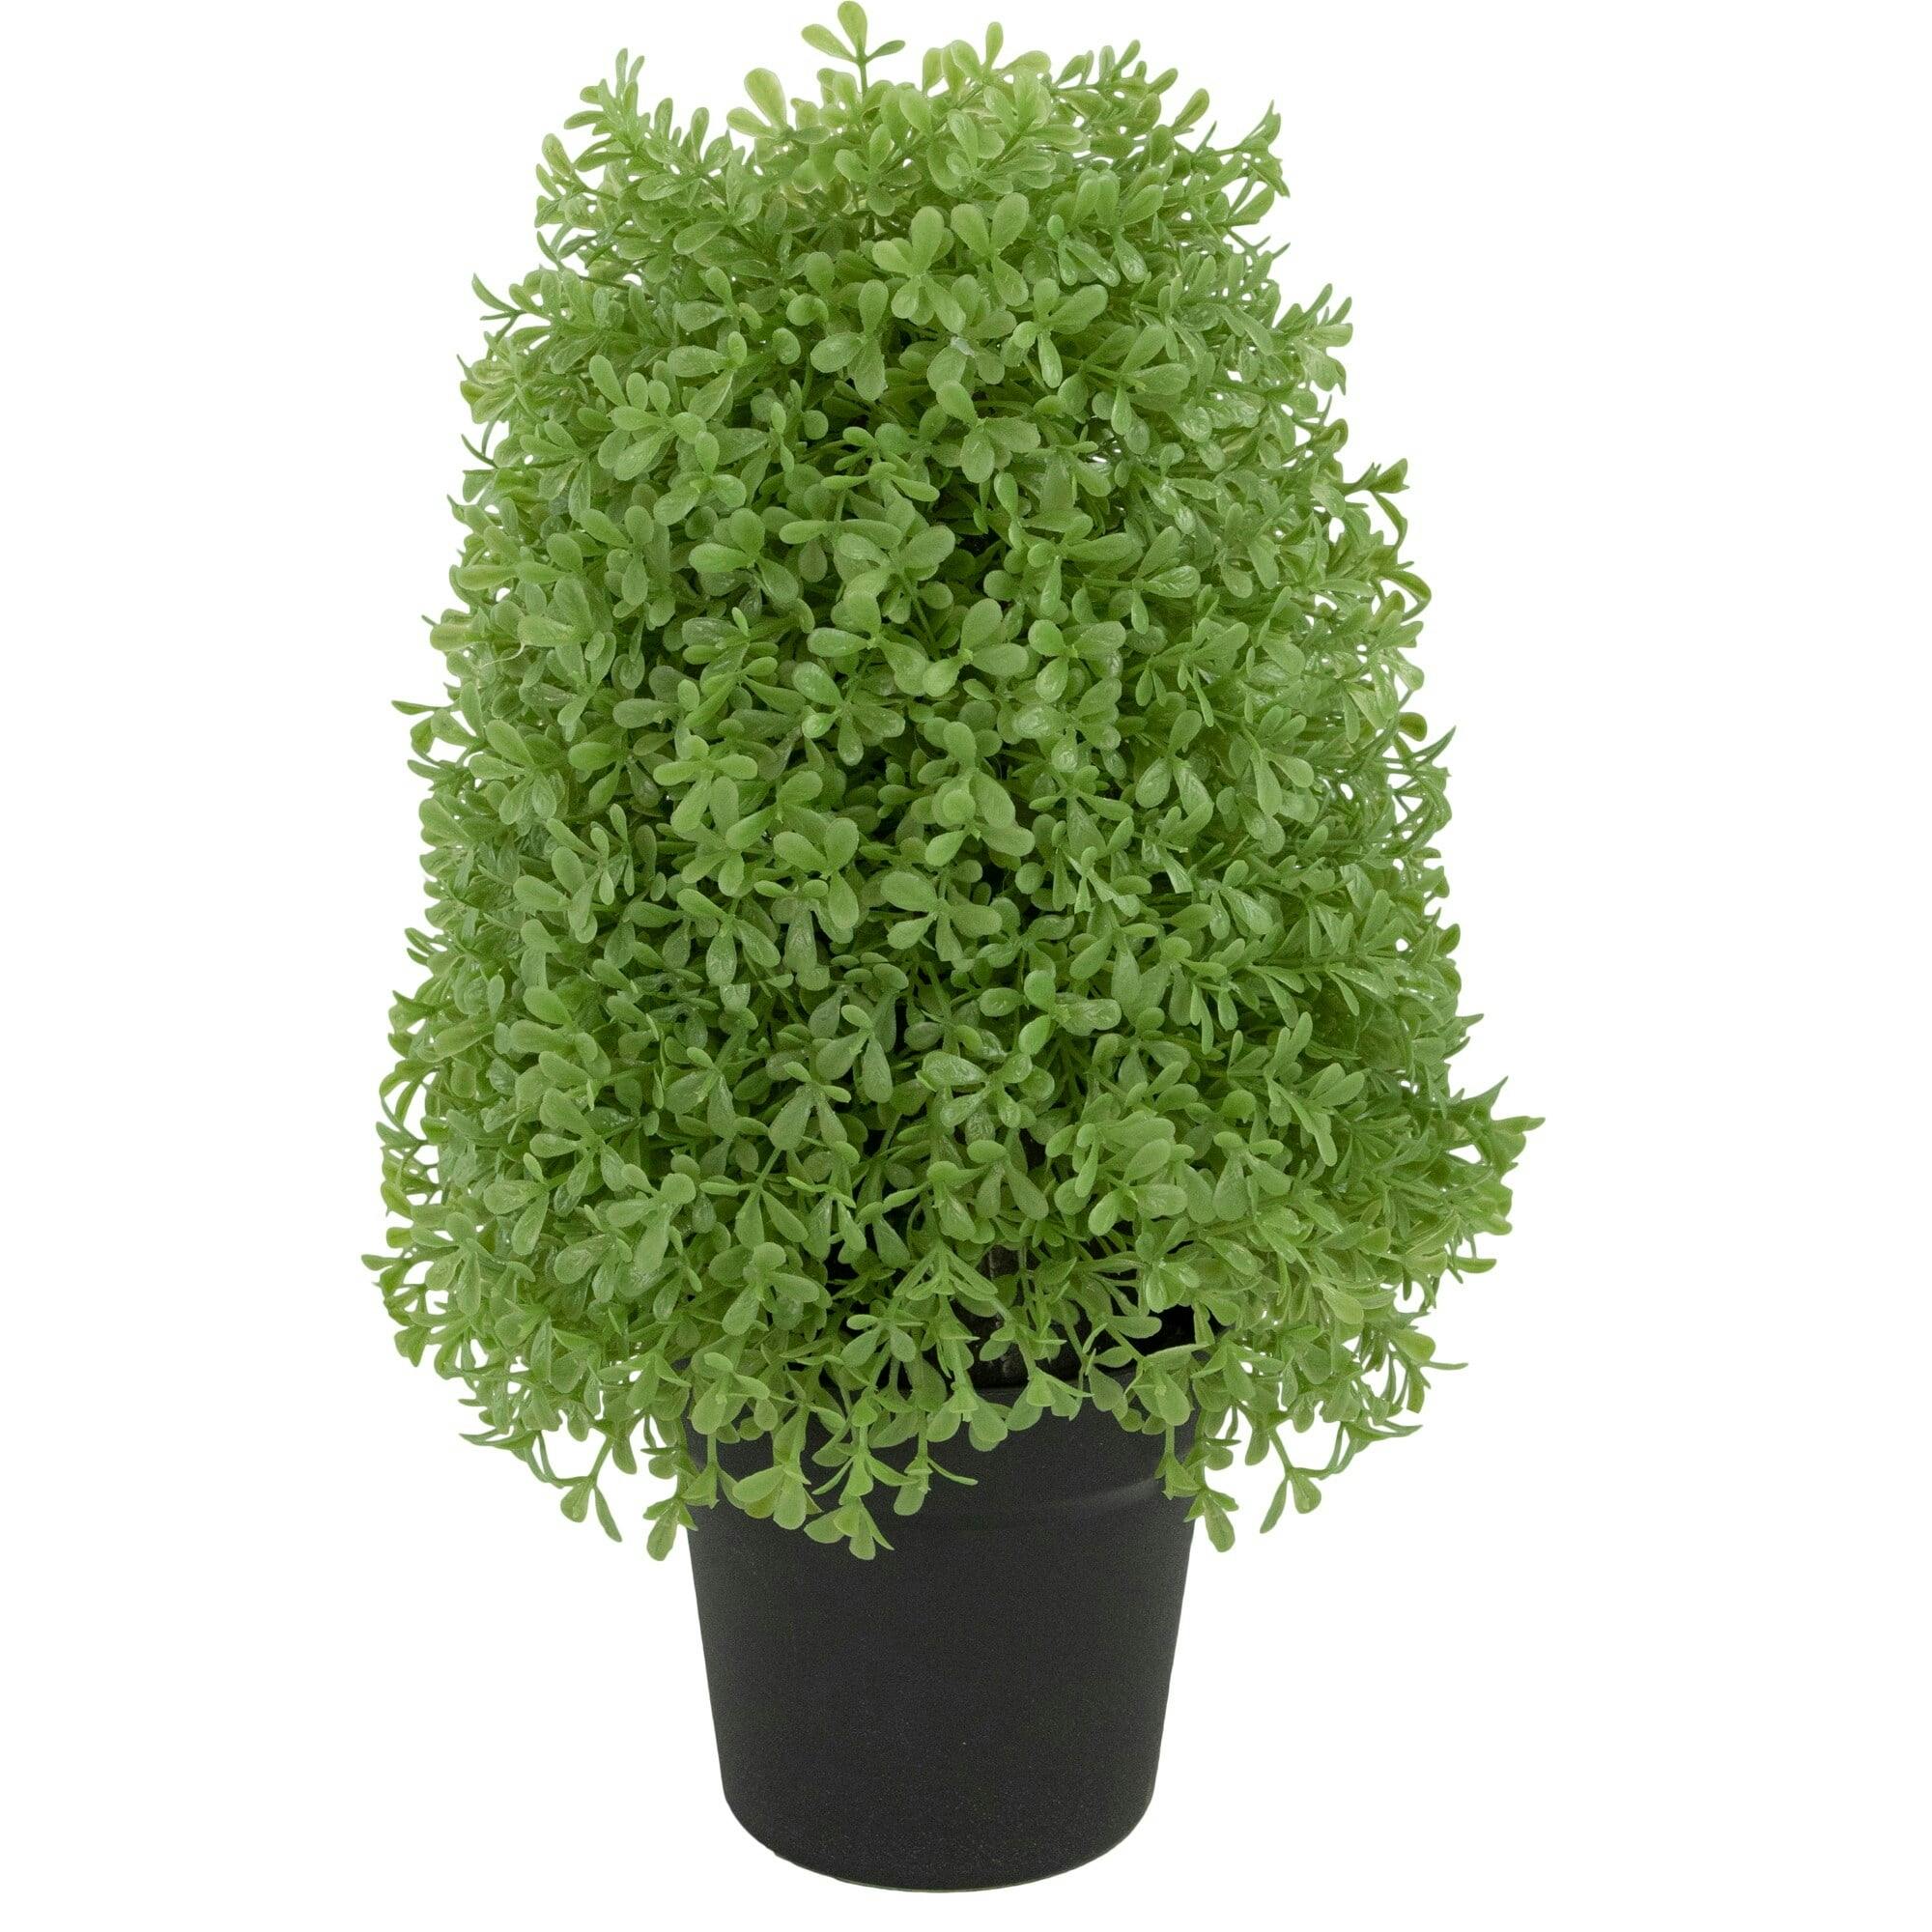 EverGreen 15" Unlit Artificial Boxwood Cone Topiary in Black Pot